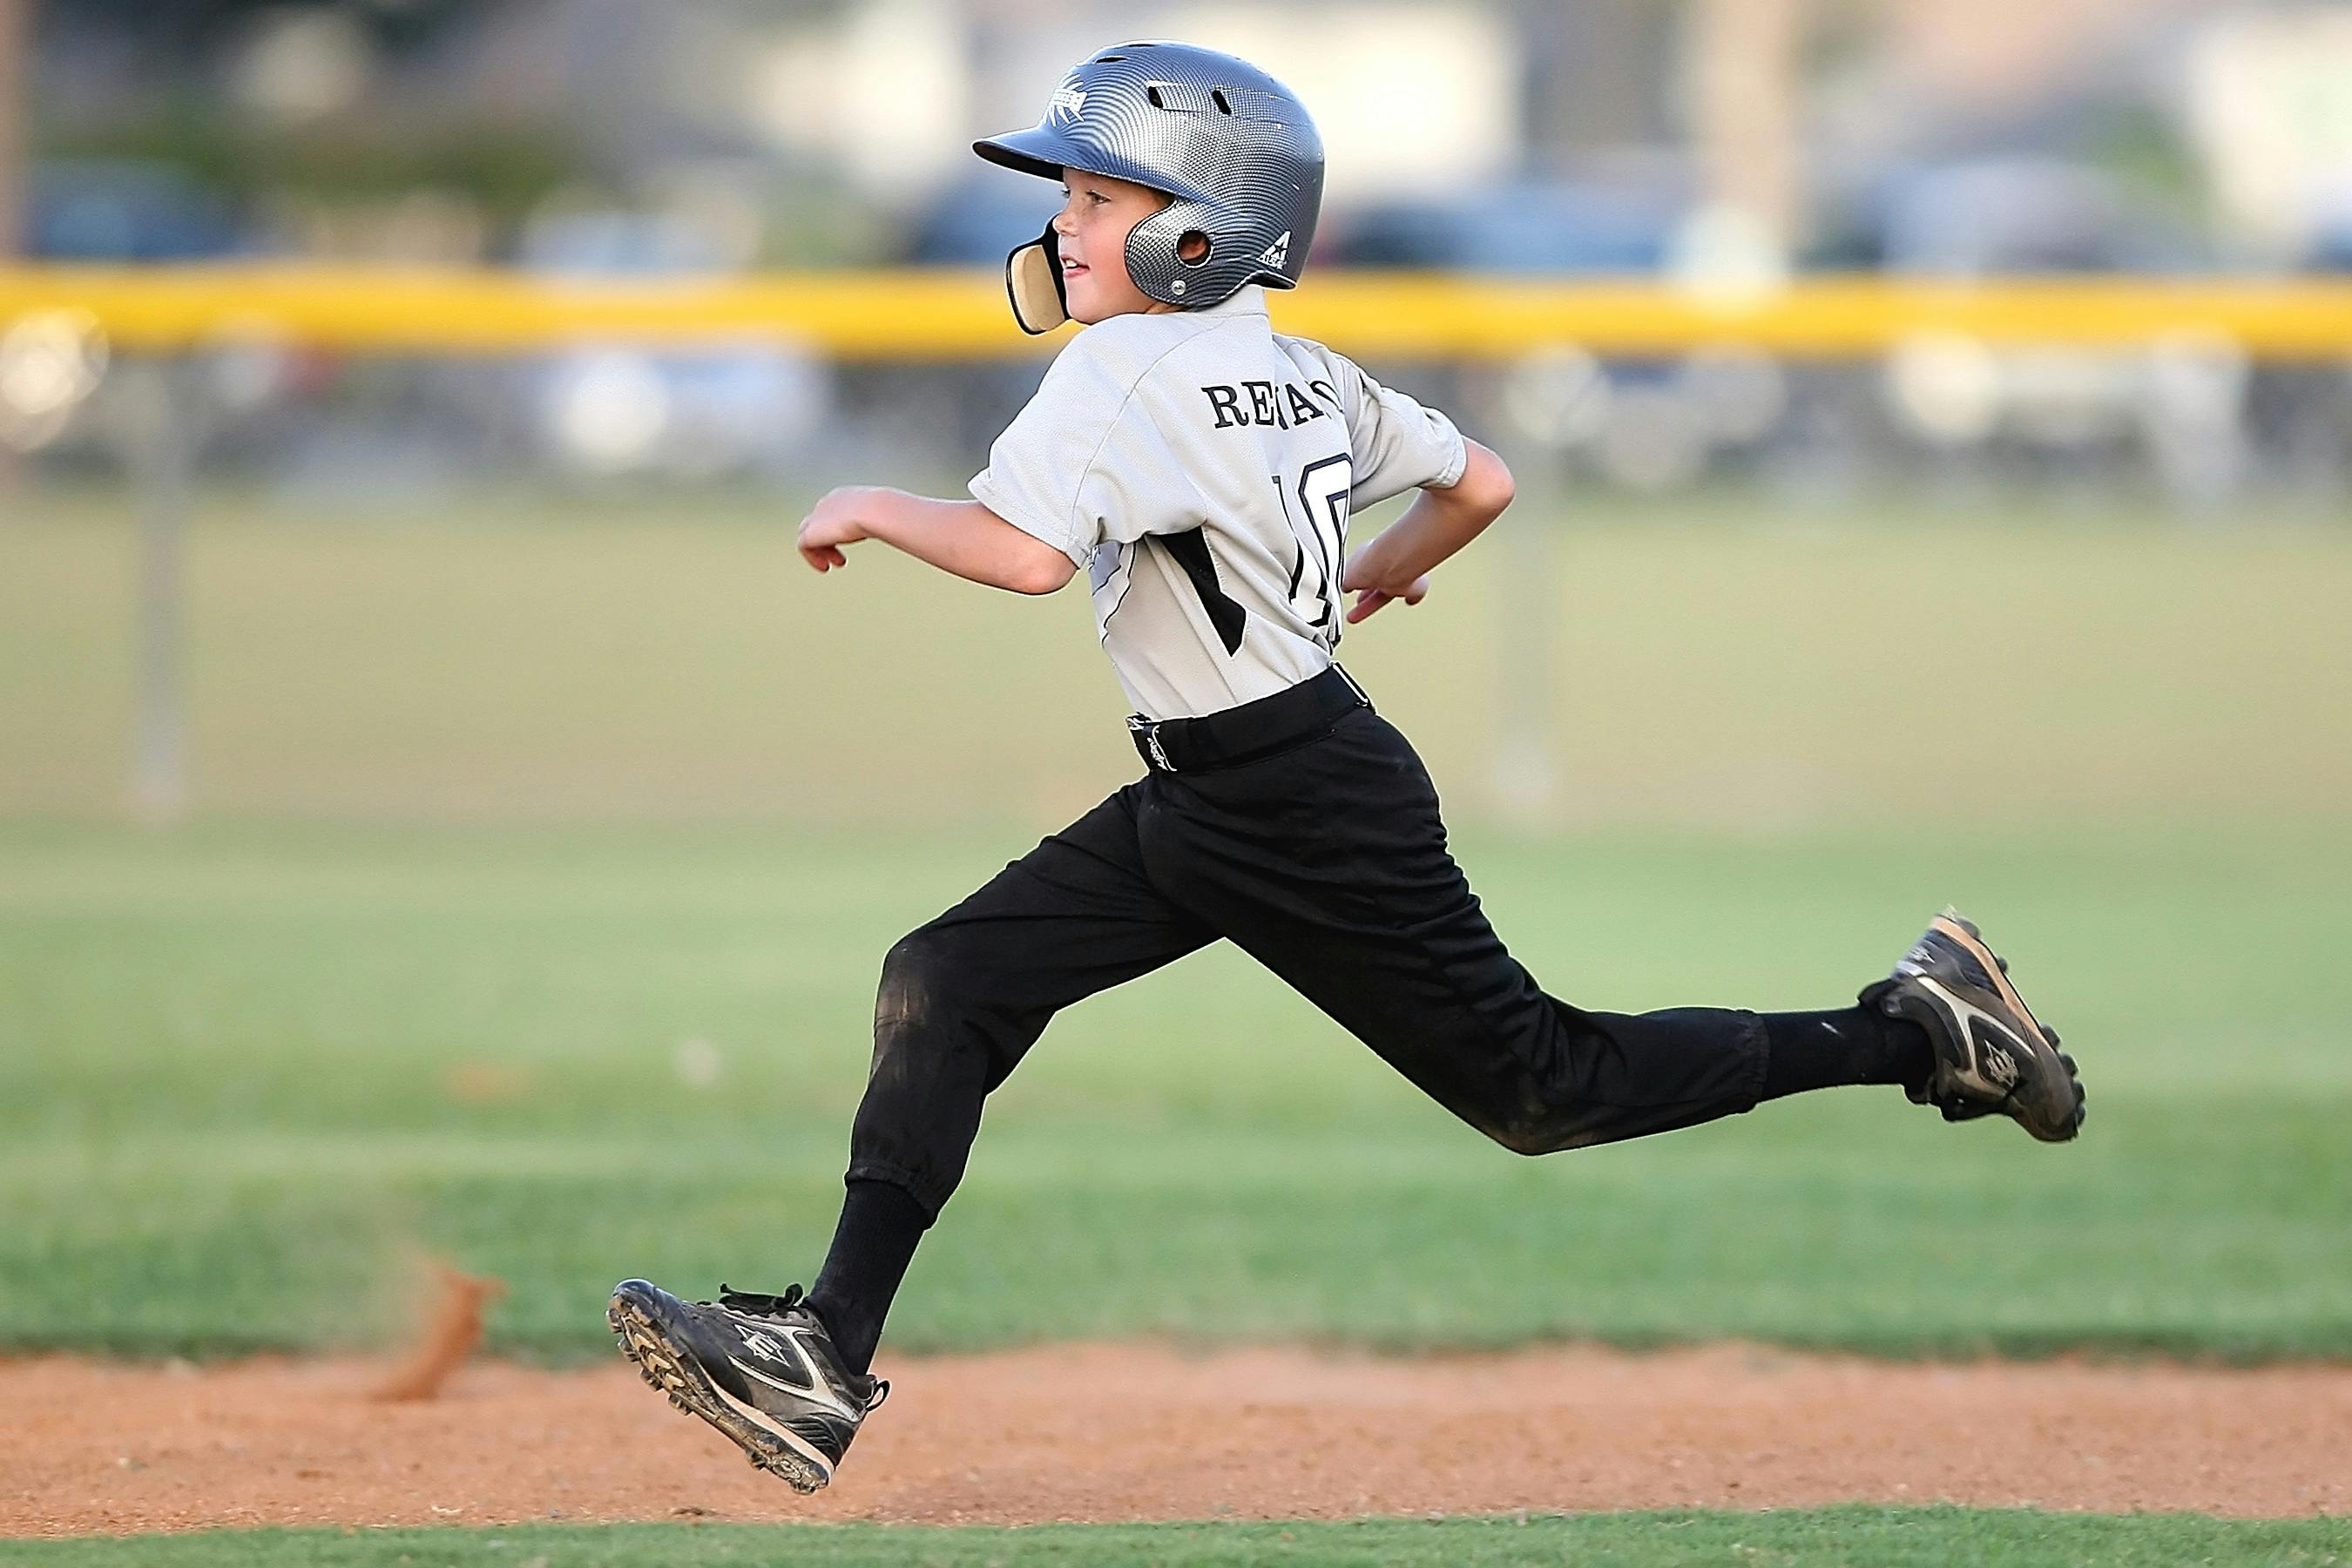 Baseball Player in Gray and Black Uniform Running · Free Stock Photo